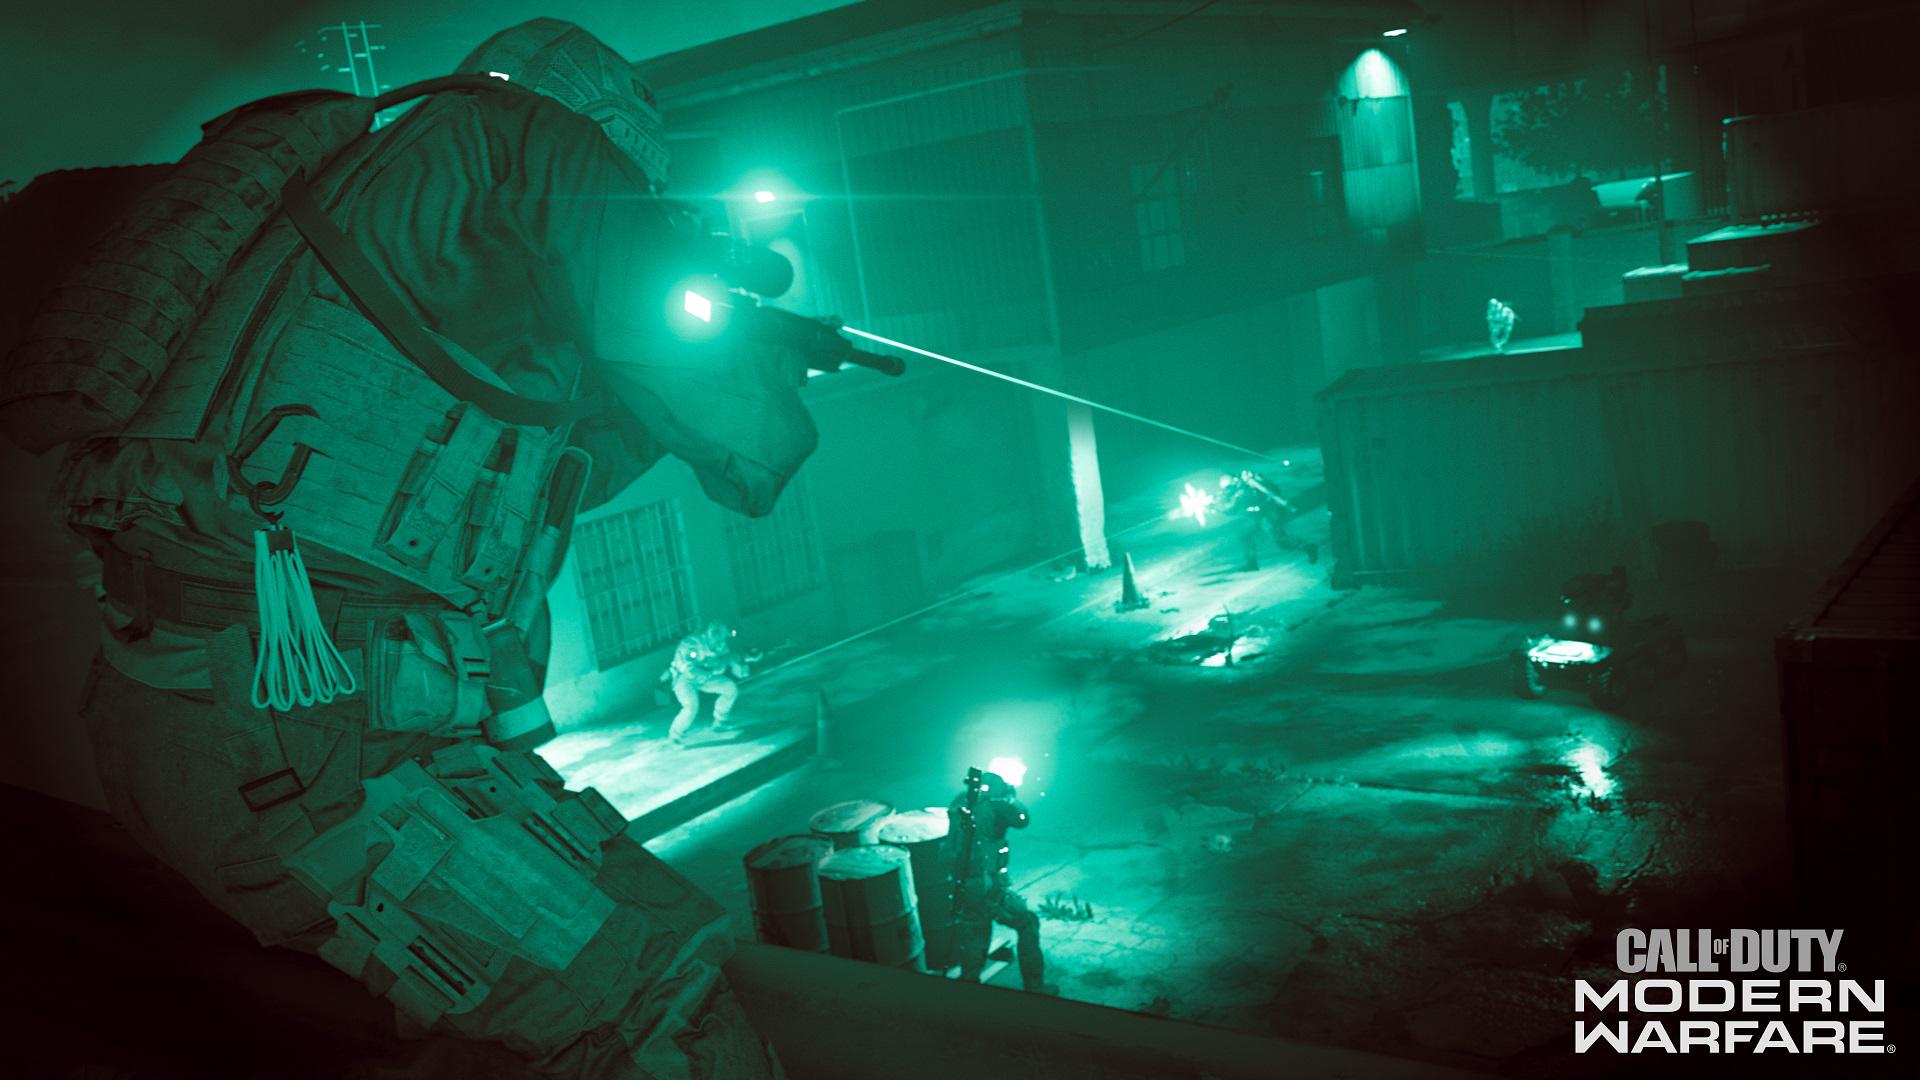 Call of Duty: Modern Warfare - PlayStation 4 - image 4 of 15